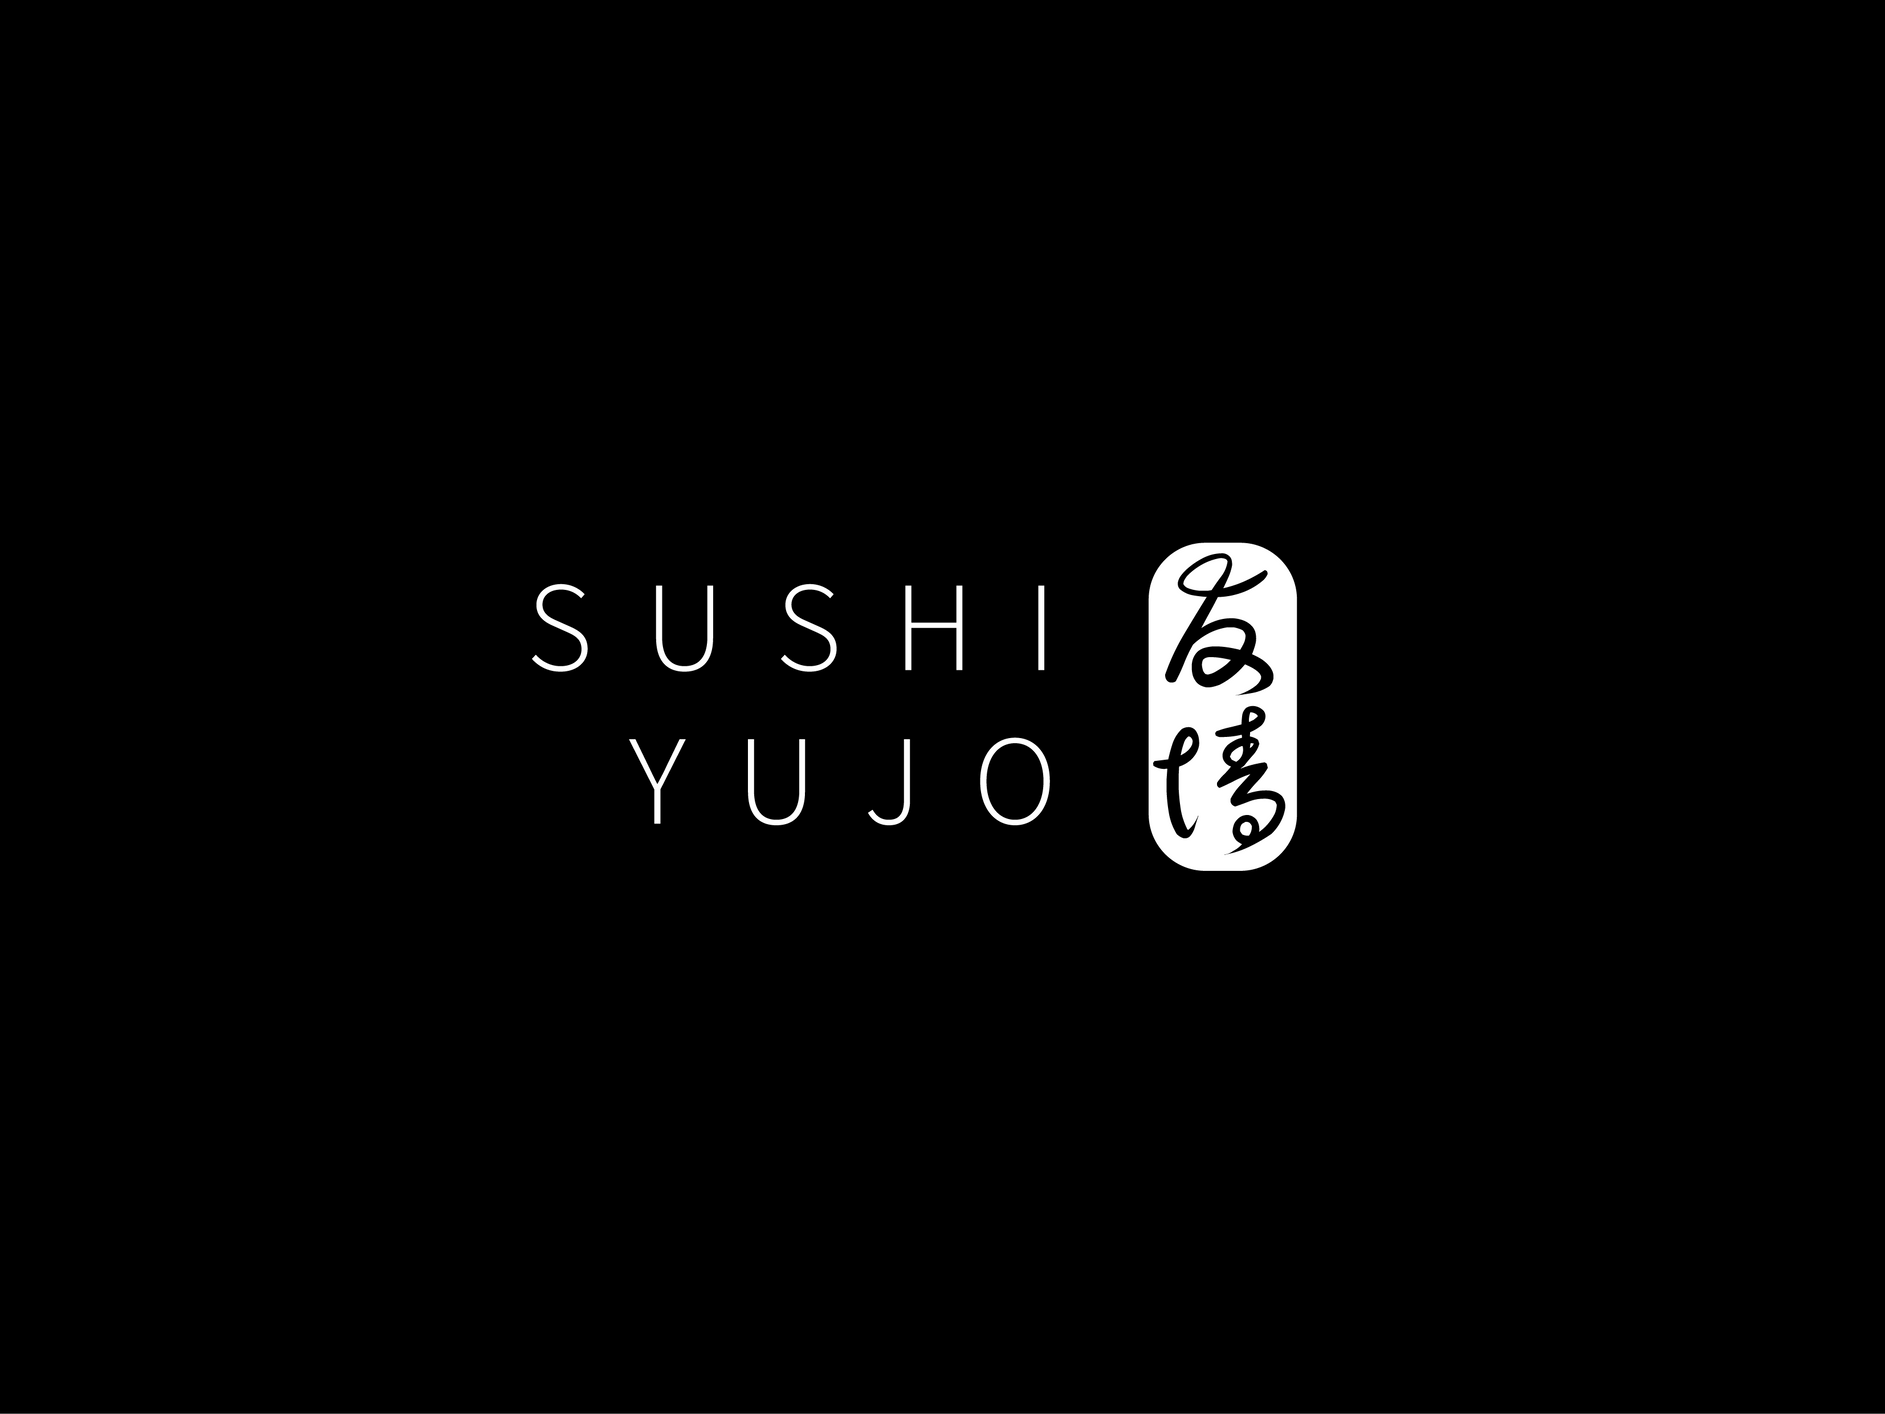 Name board of Sushi Yujo restaurant at Amara Hotel Singapore